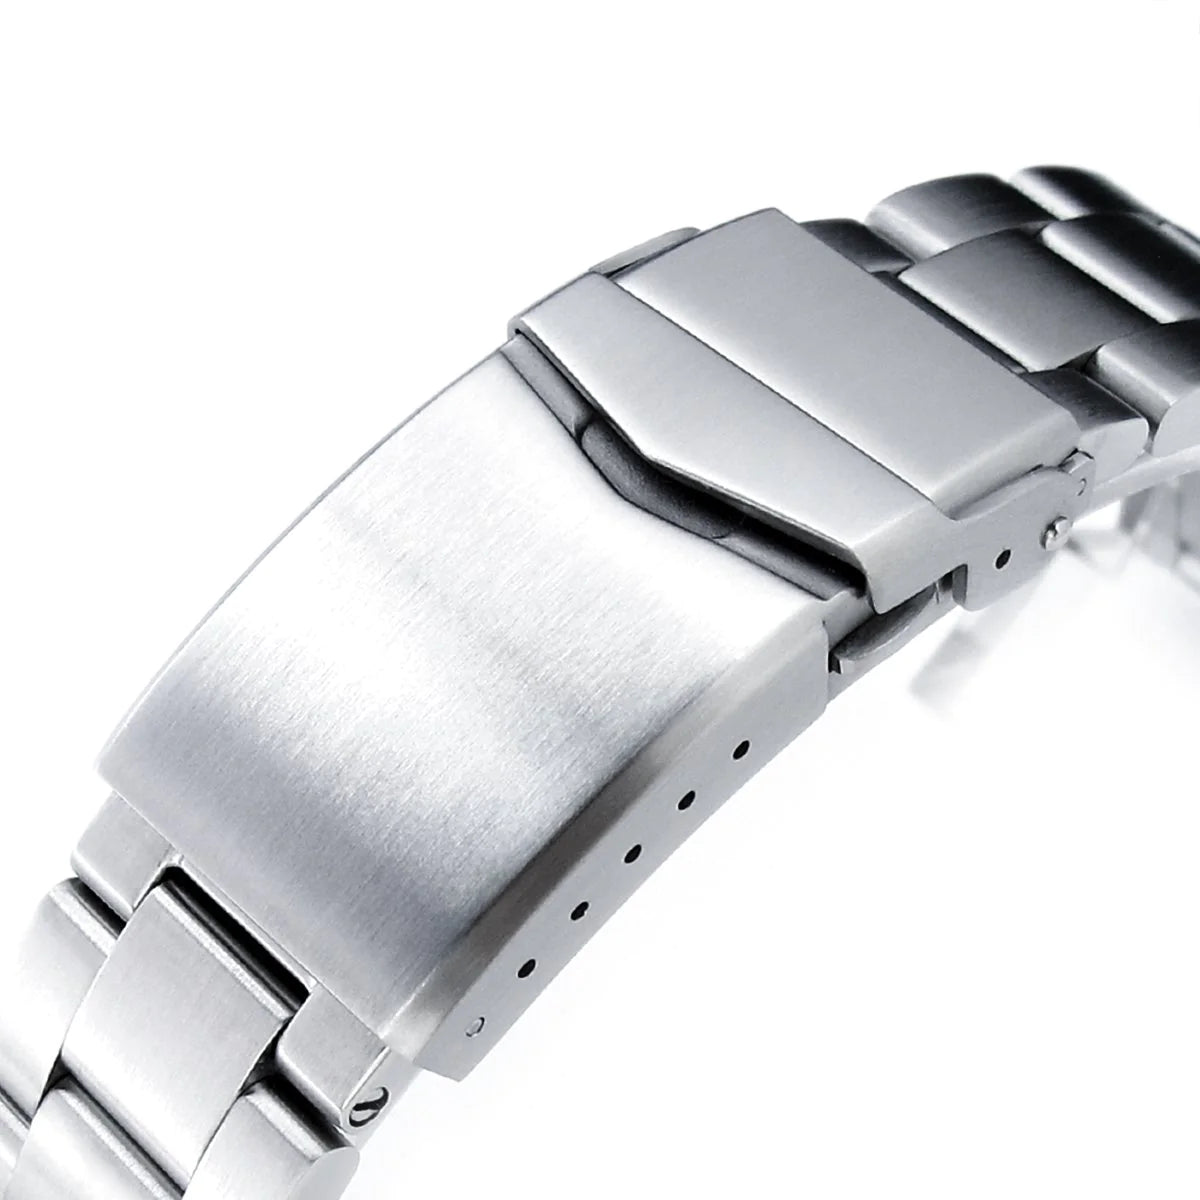 [STRAPCODE] Super-O Steel Bracelet with V-Clasp